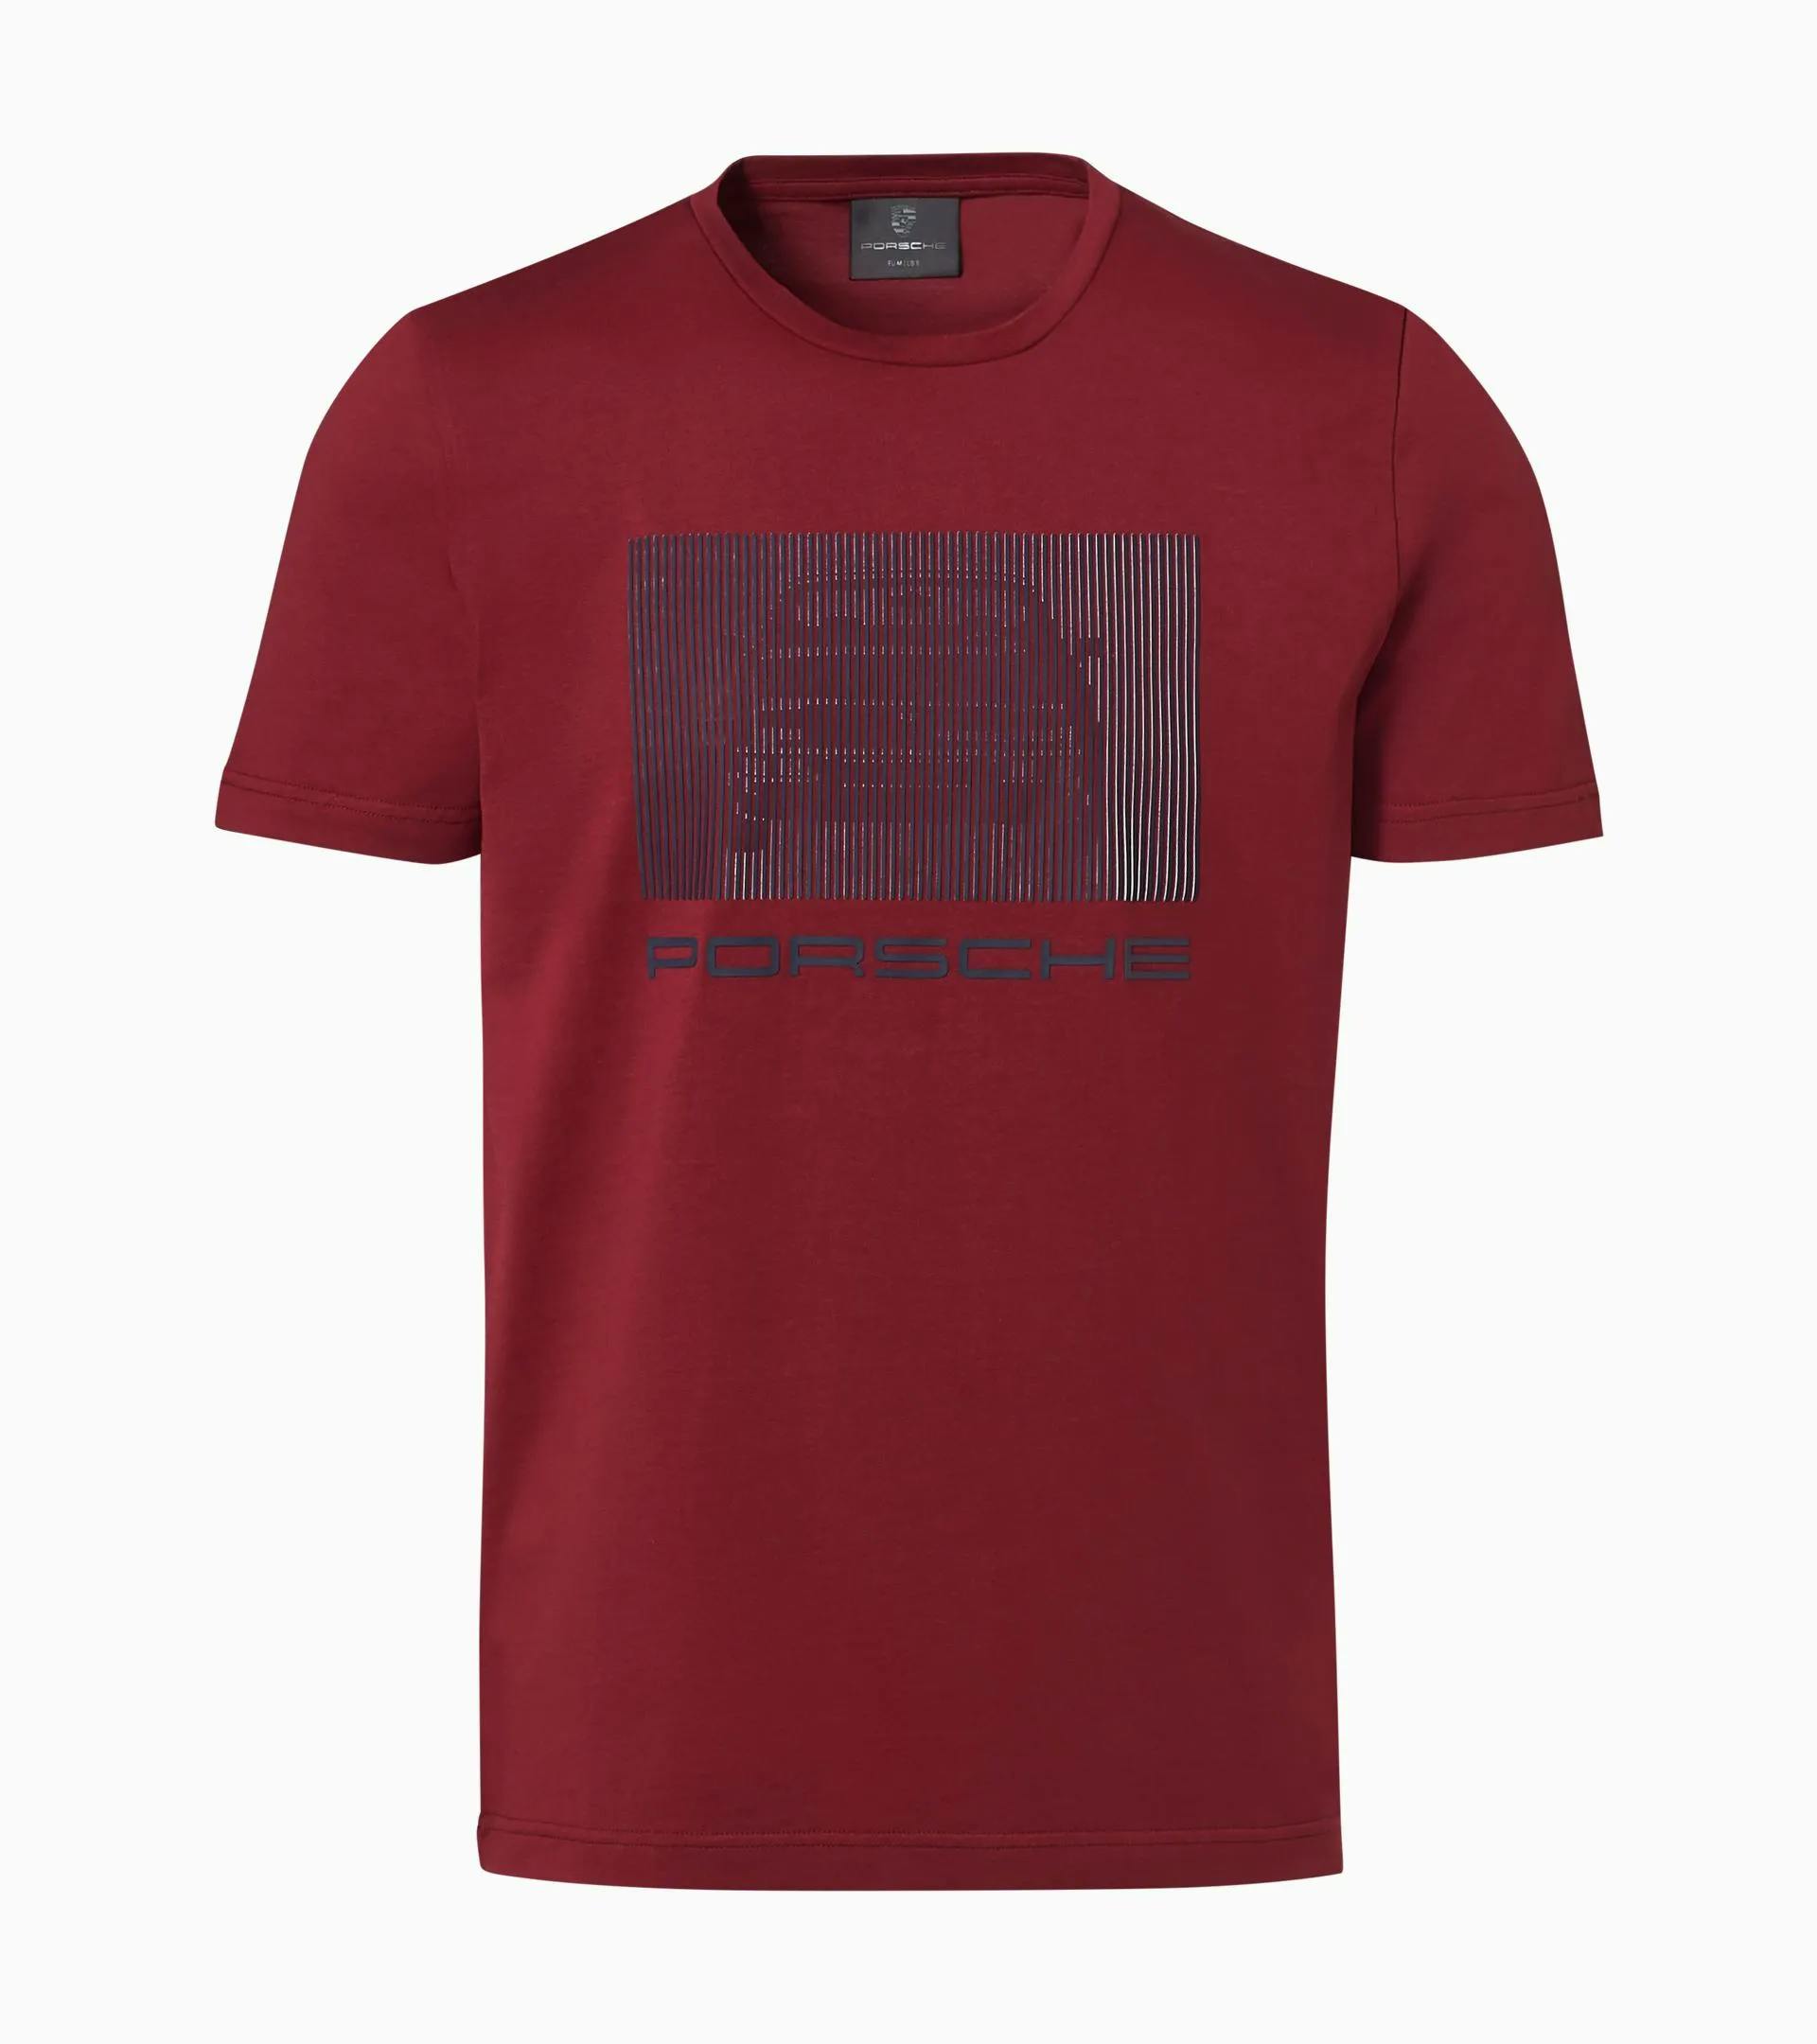 T-shirt – Transaxle 1